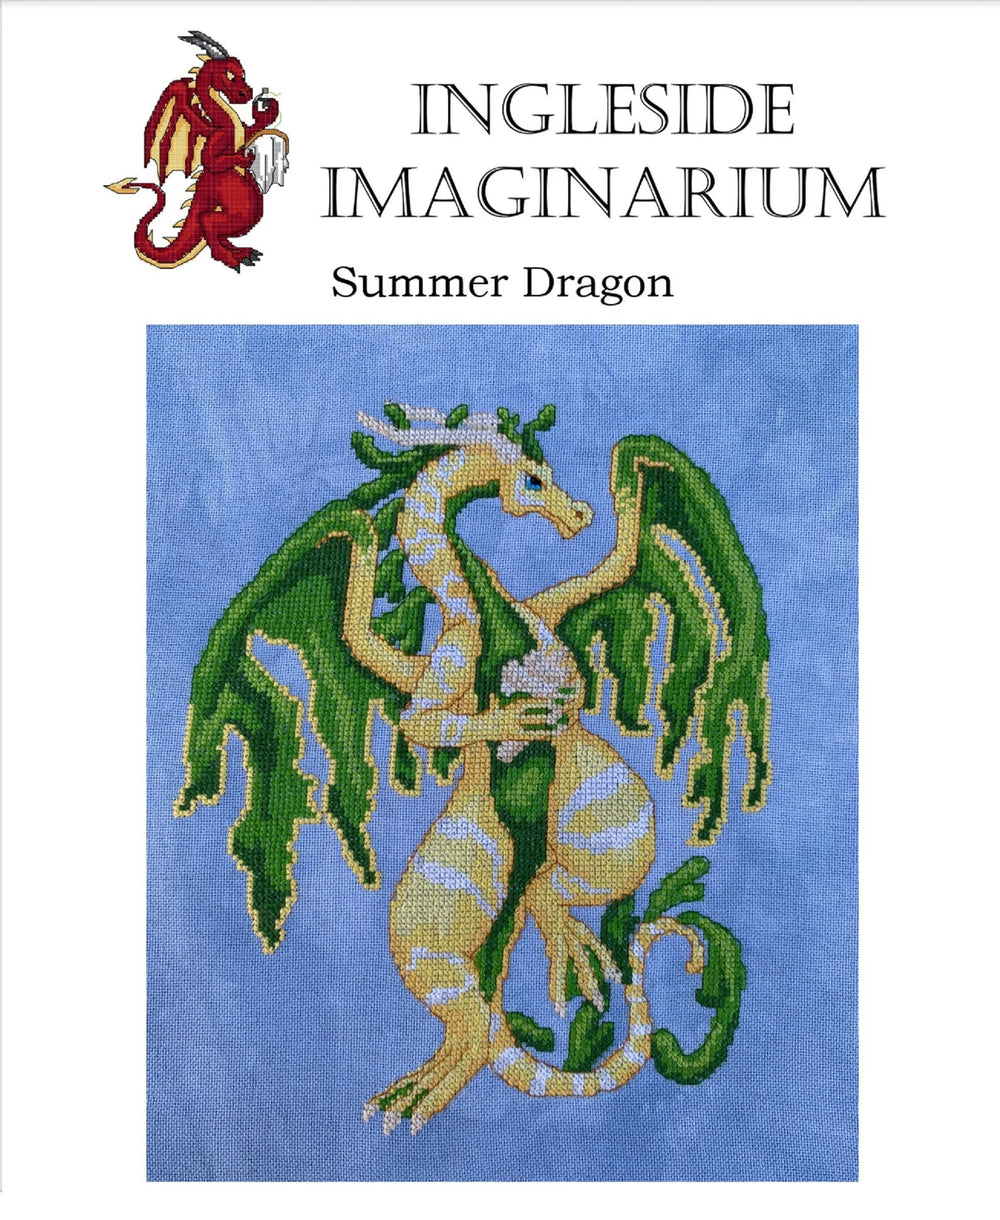 Summer Dragon by Ingleside Imaginarium